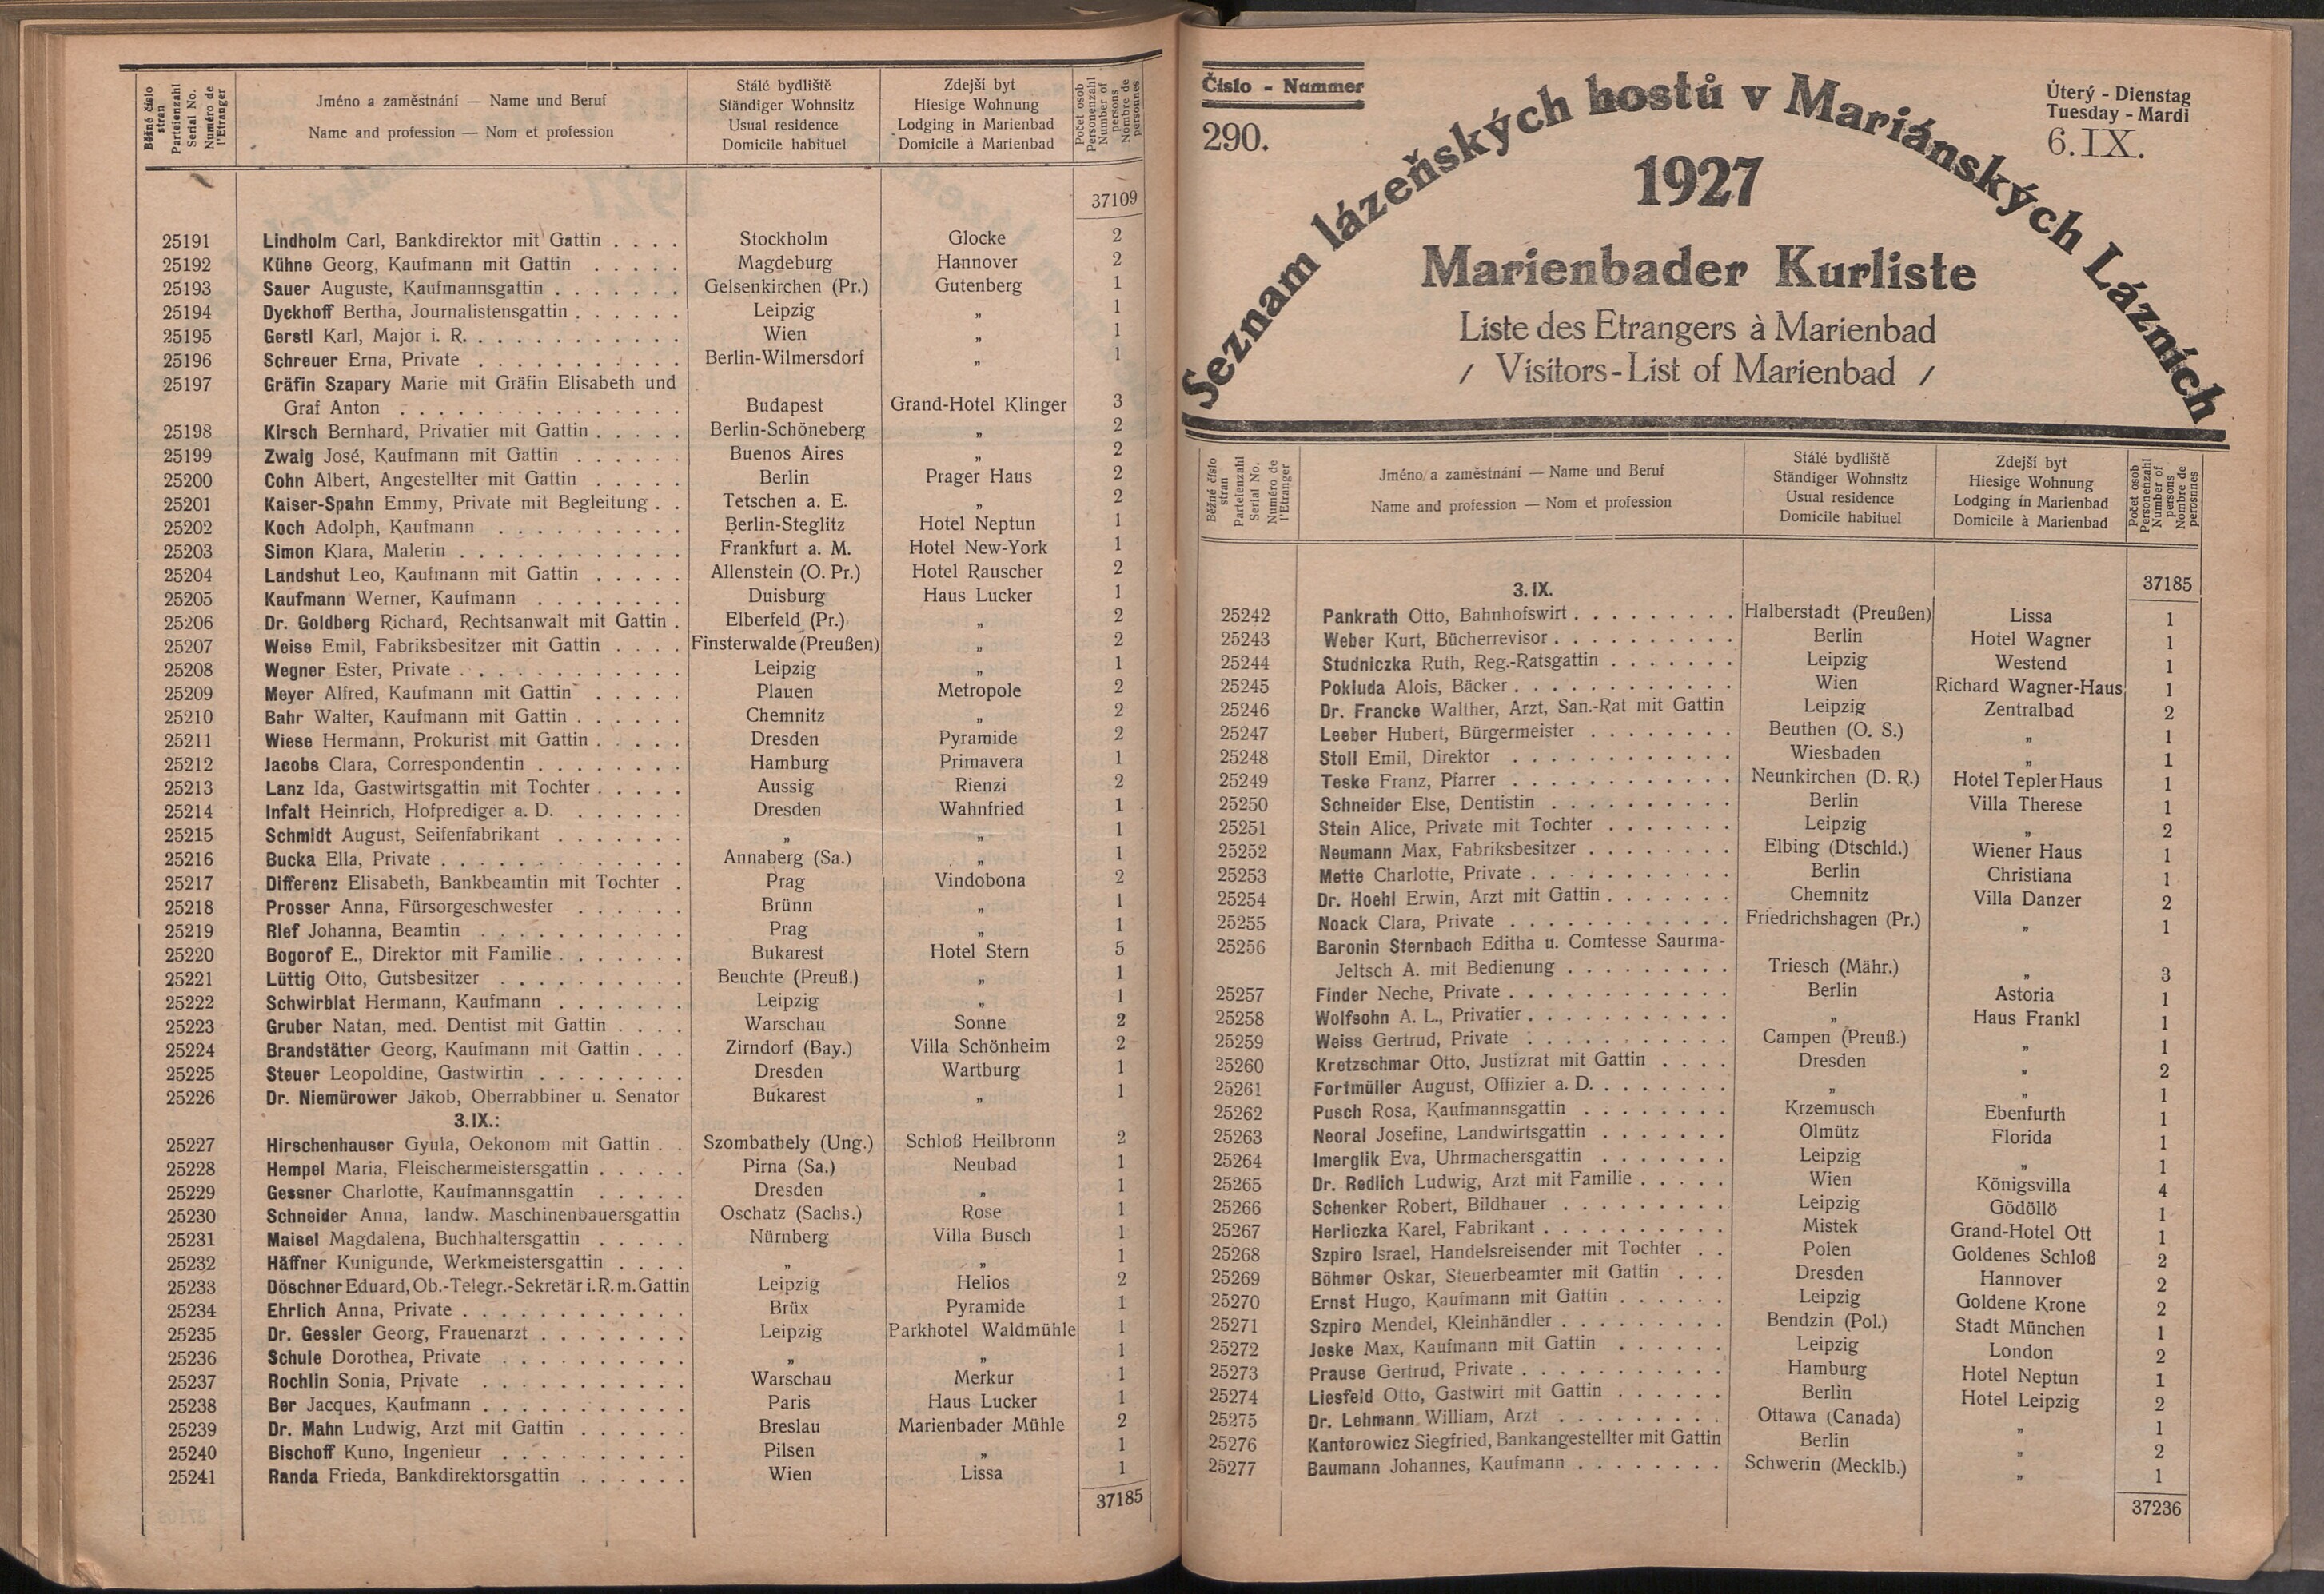 372. soap-ch_knihovna_marienbader-kurliste-1927_3720